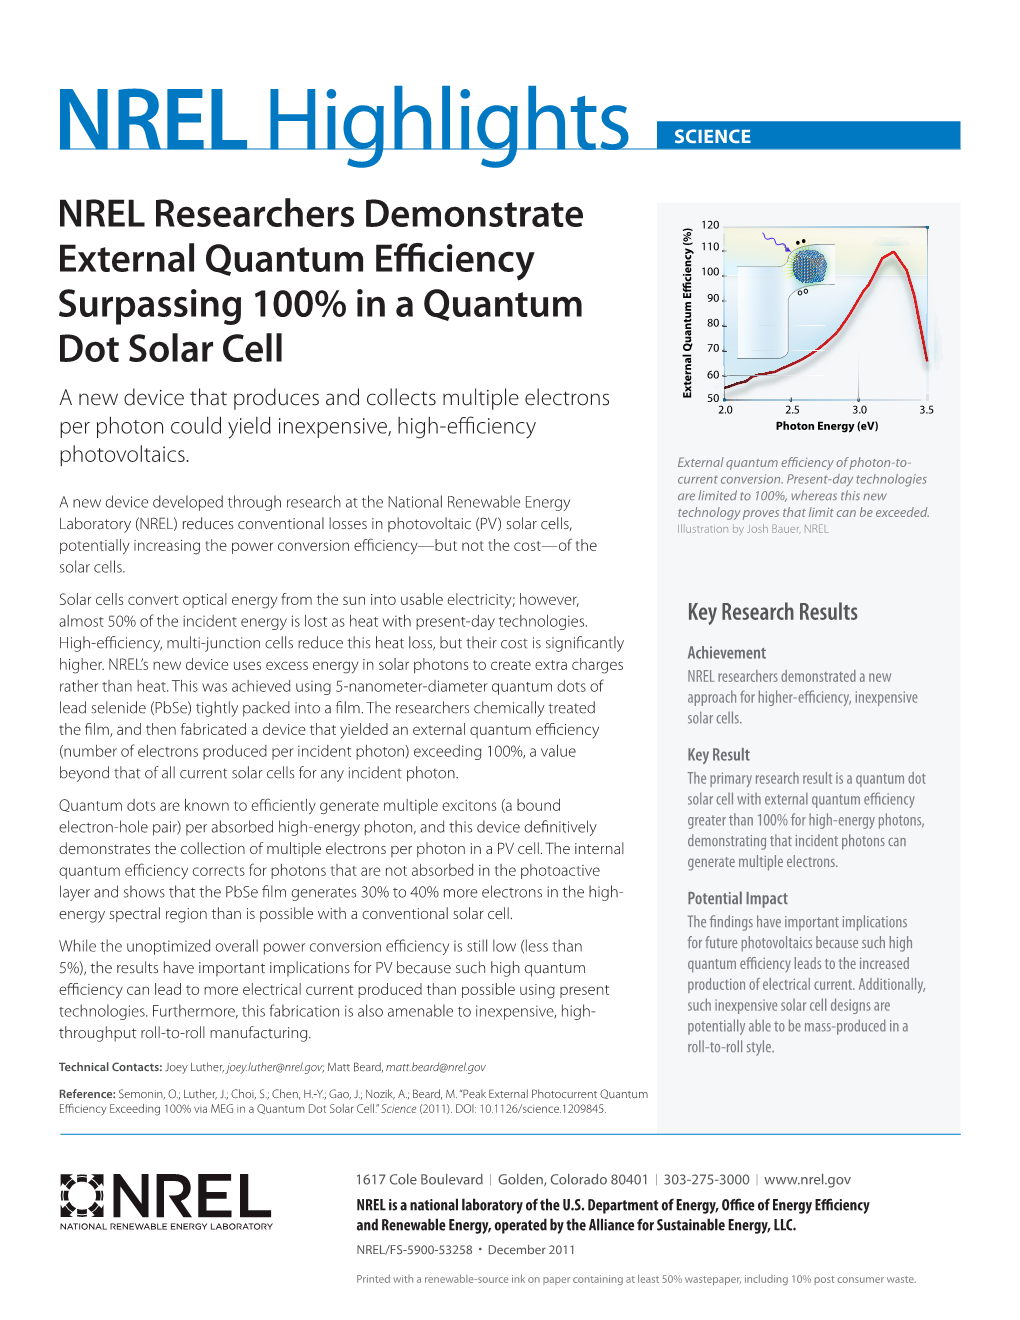 NREL Researchers Demonstrate External Quantum Efficiency